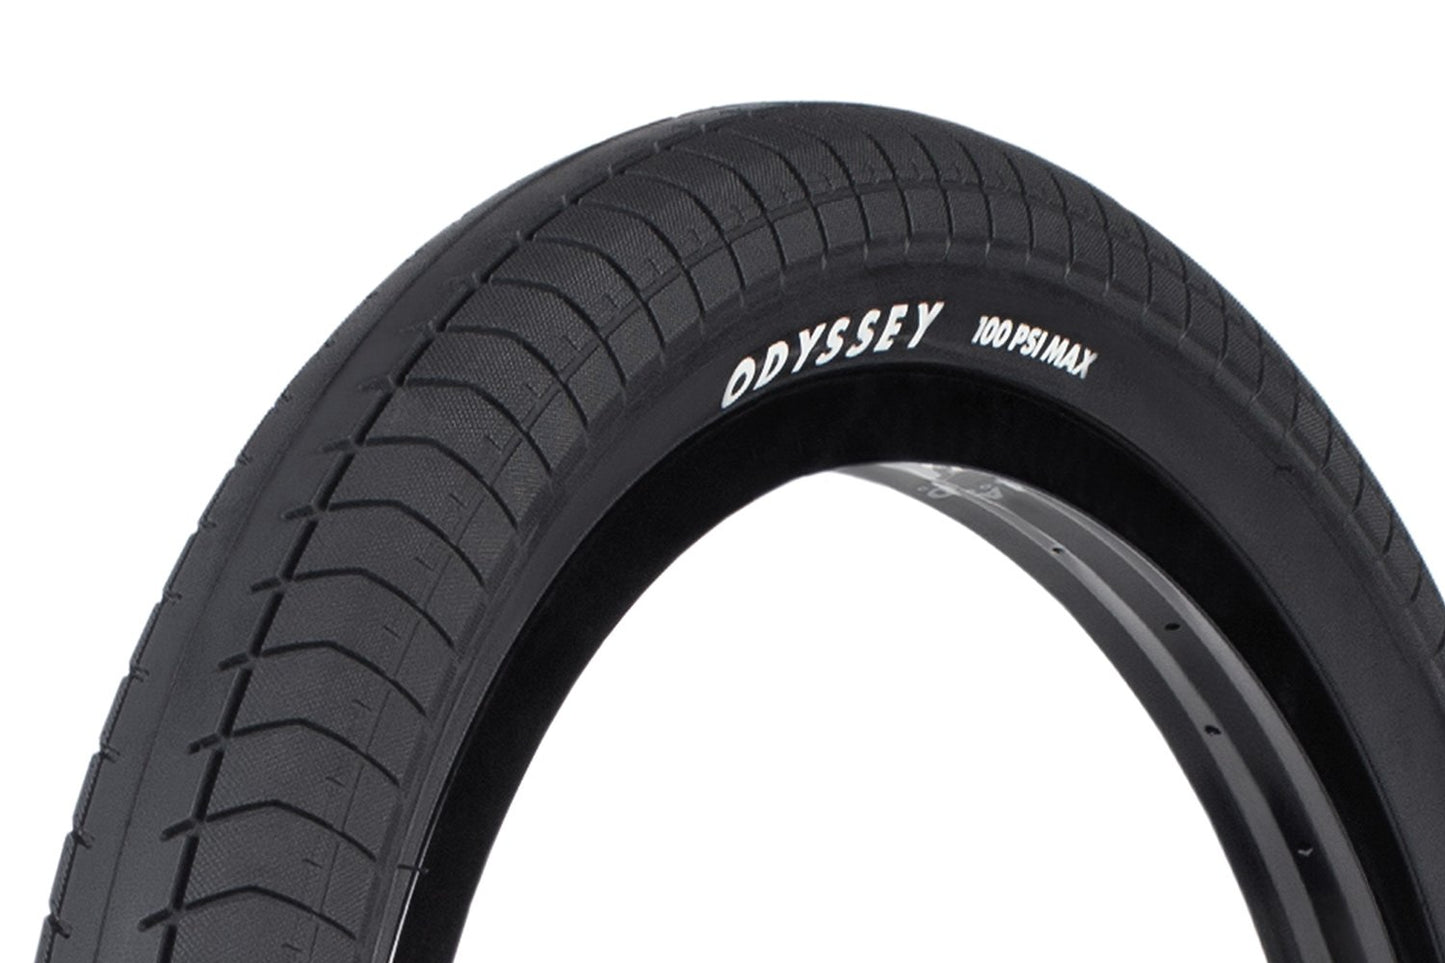 Odyssey Path Pro Tyres